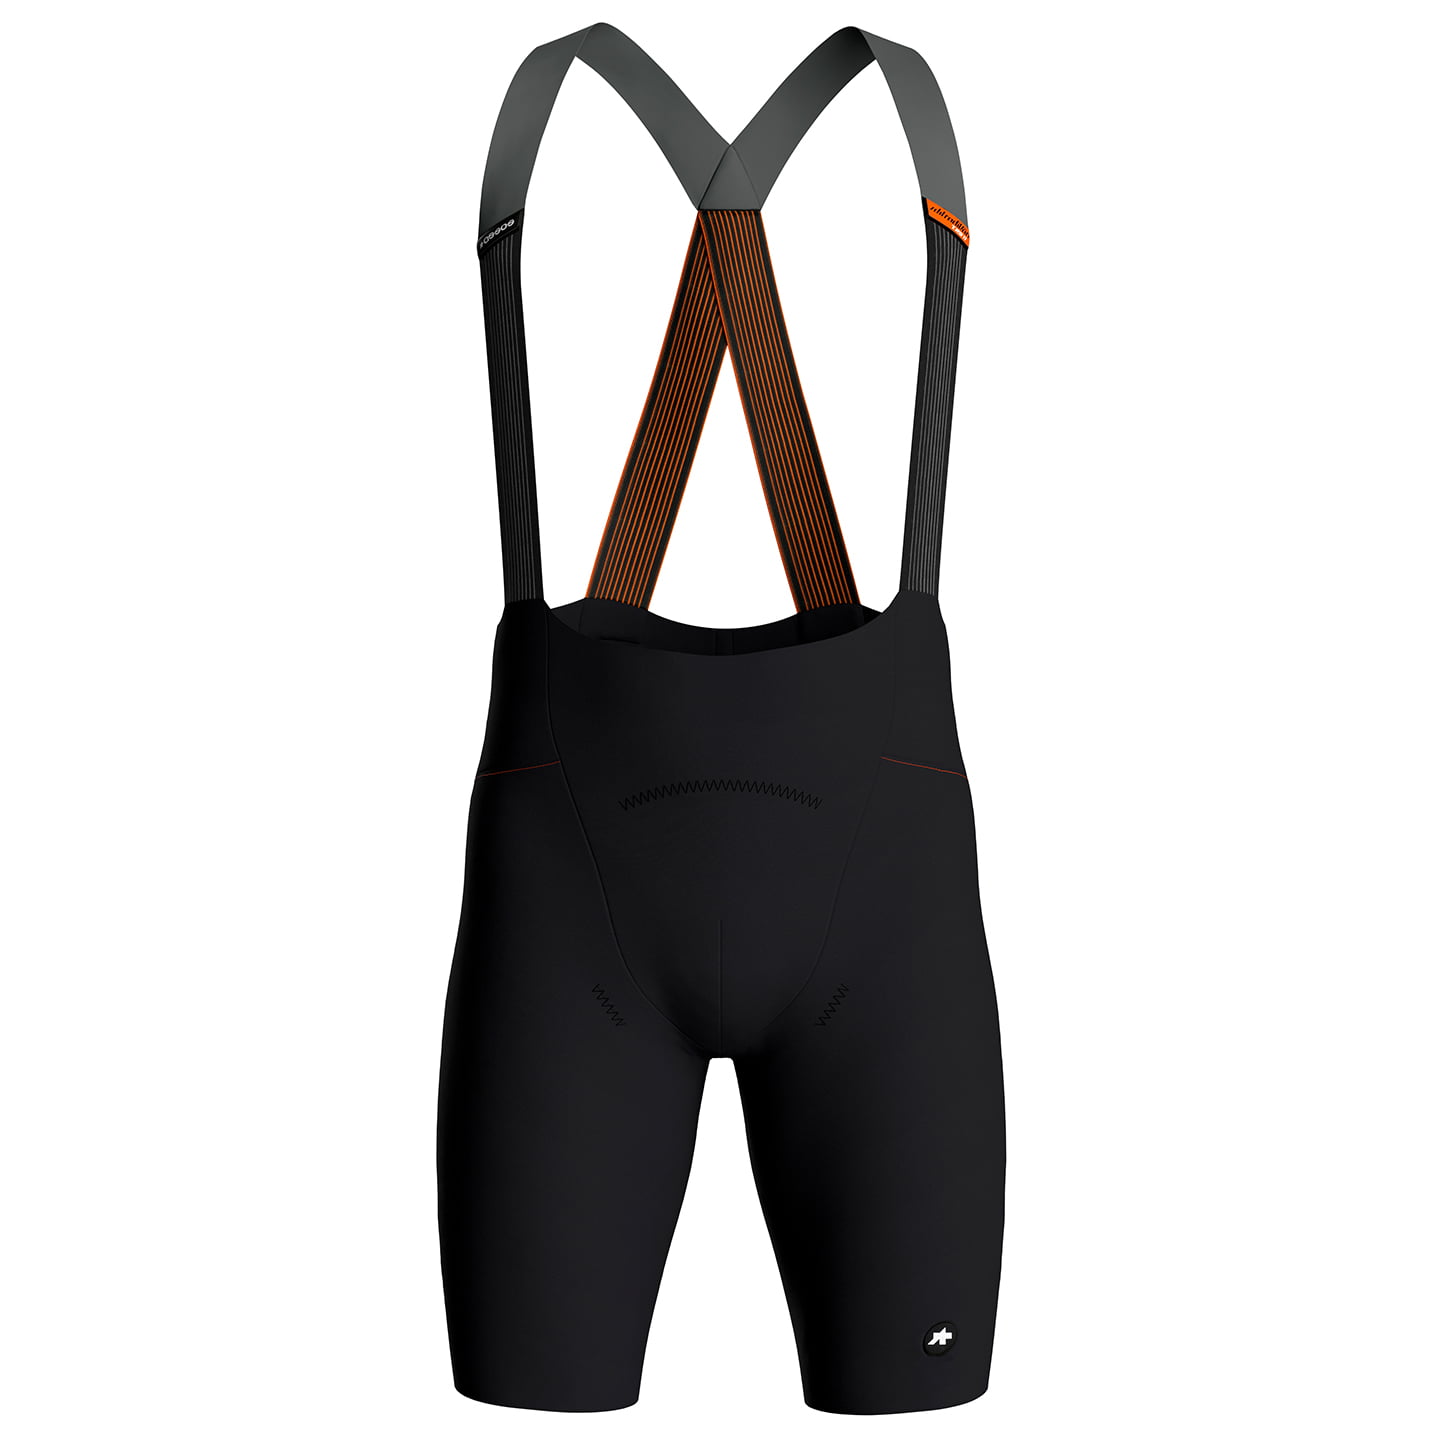 ASSOS Equipe RSR S11 Bib Shorts, for men, size L, Cycle shorts, Cycling clothing